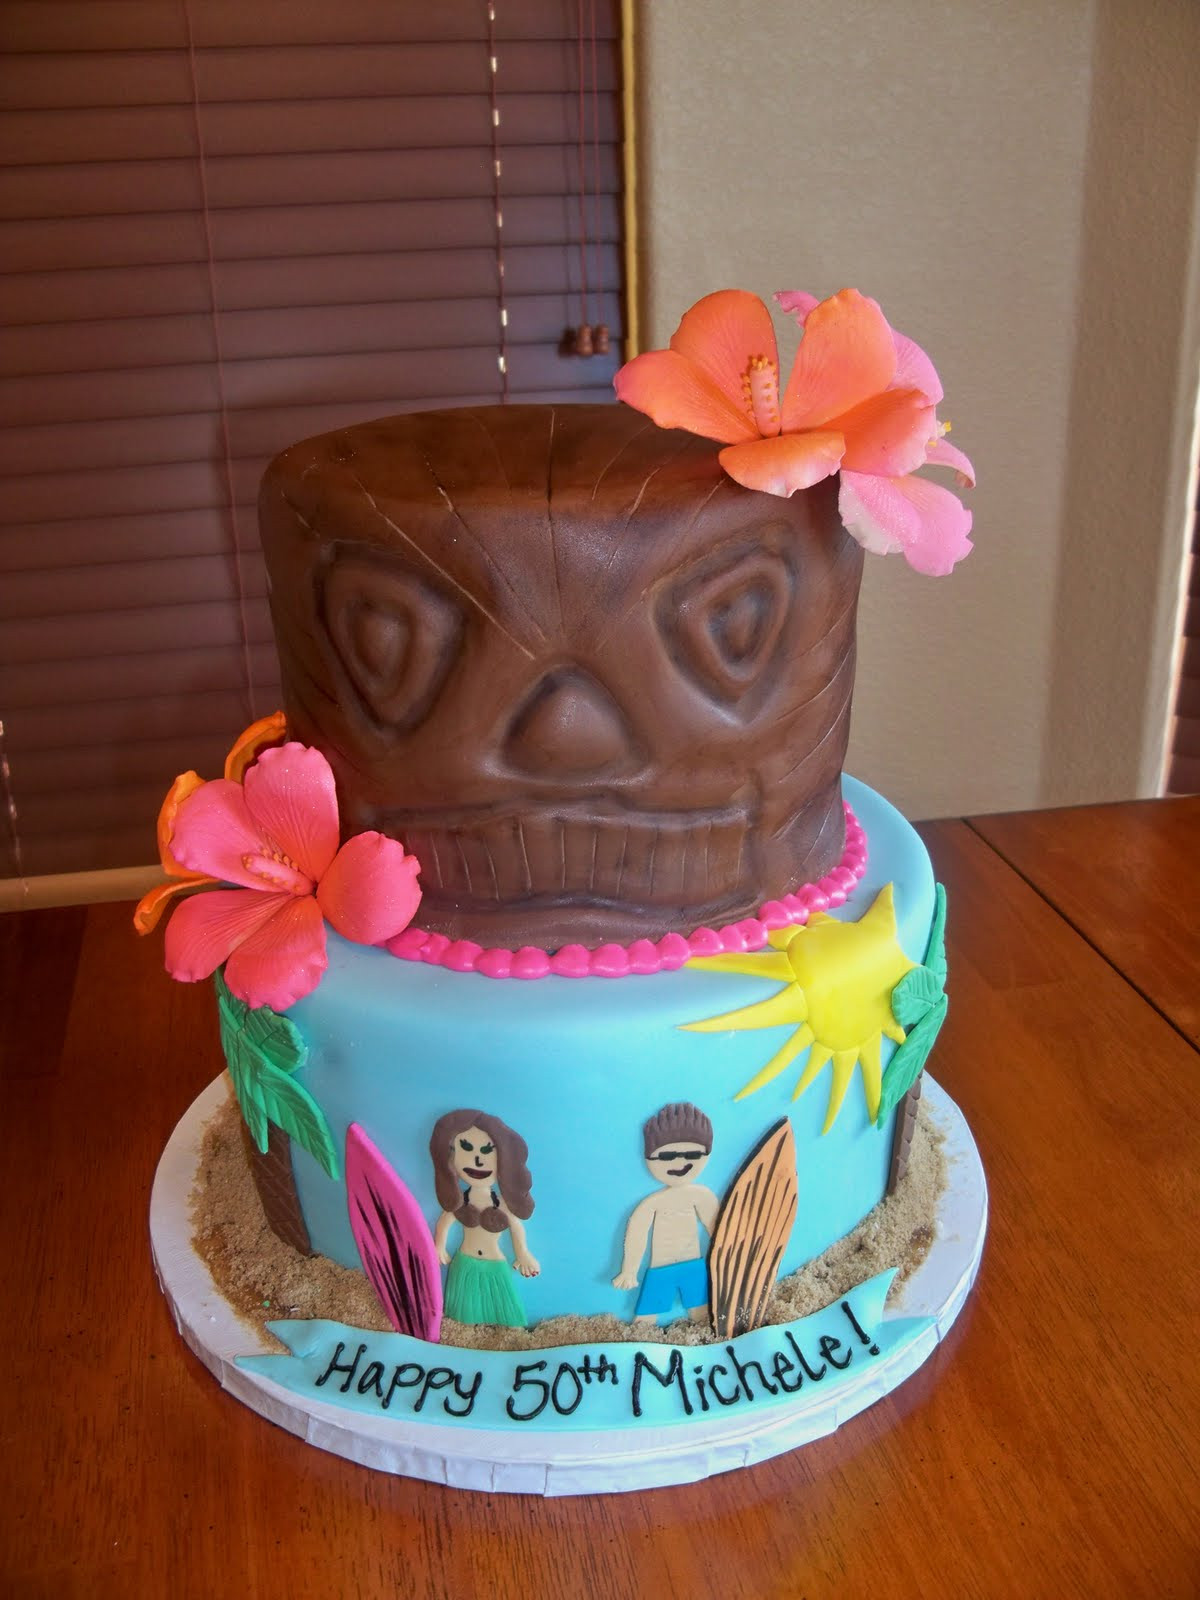 Hawaii Birthday Cake
 The Cake Shoppe Hawaiian Themed Birthday Cake